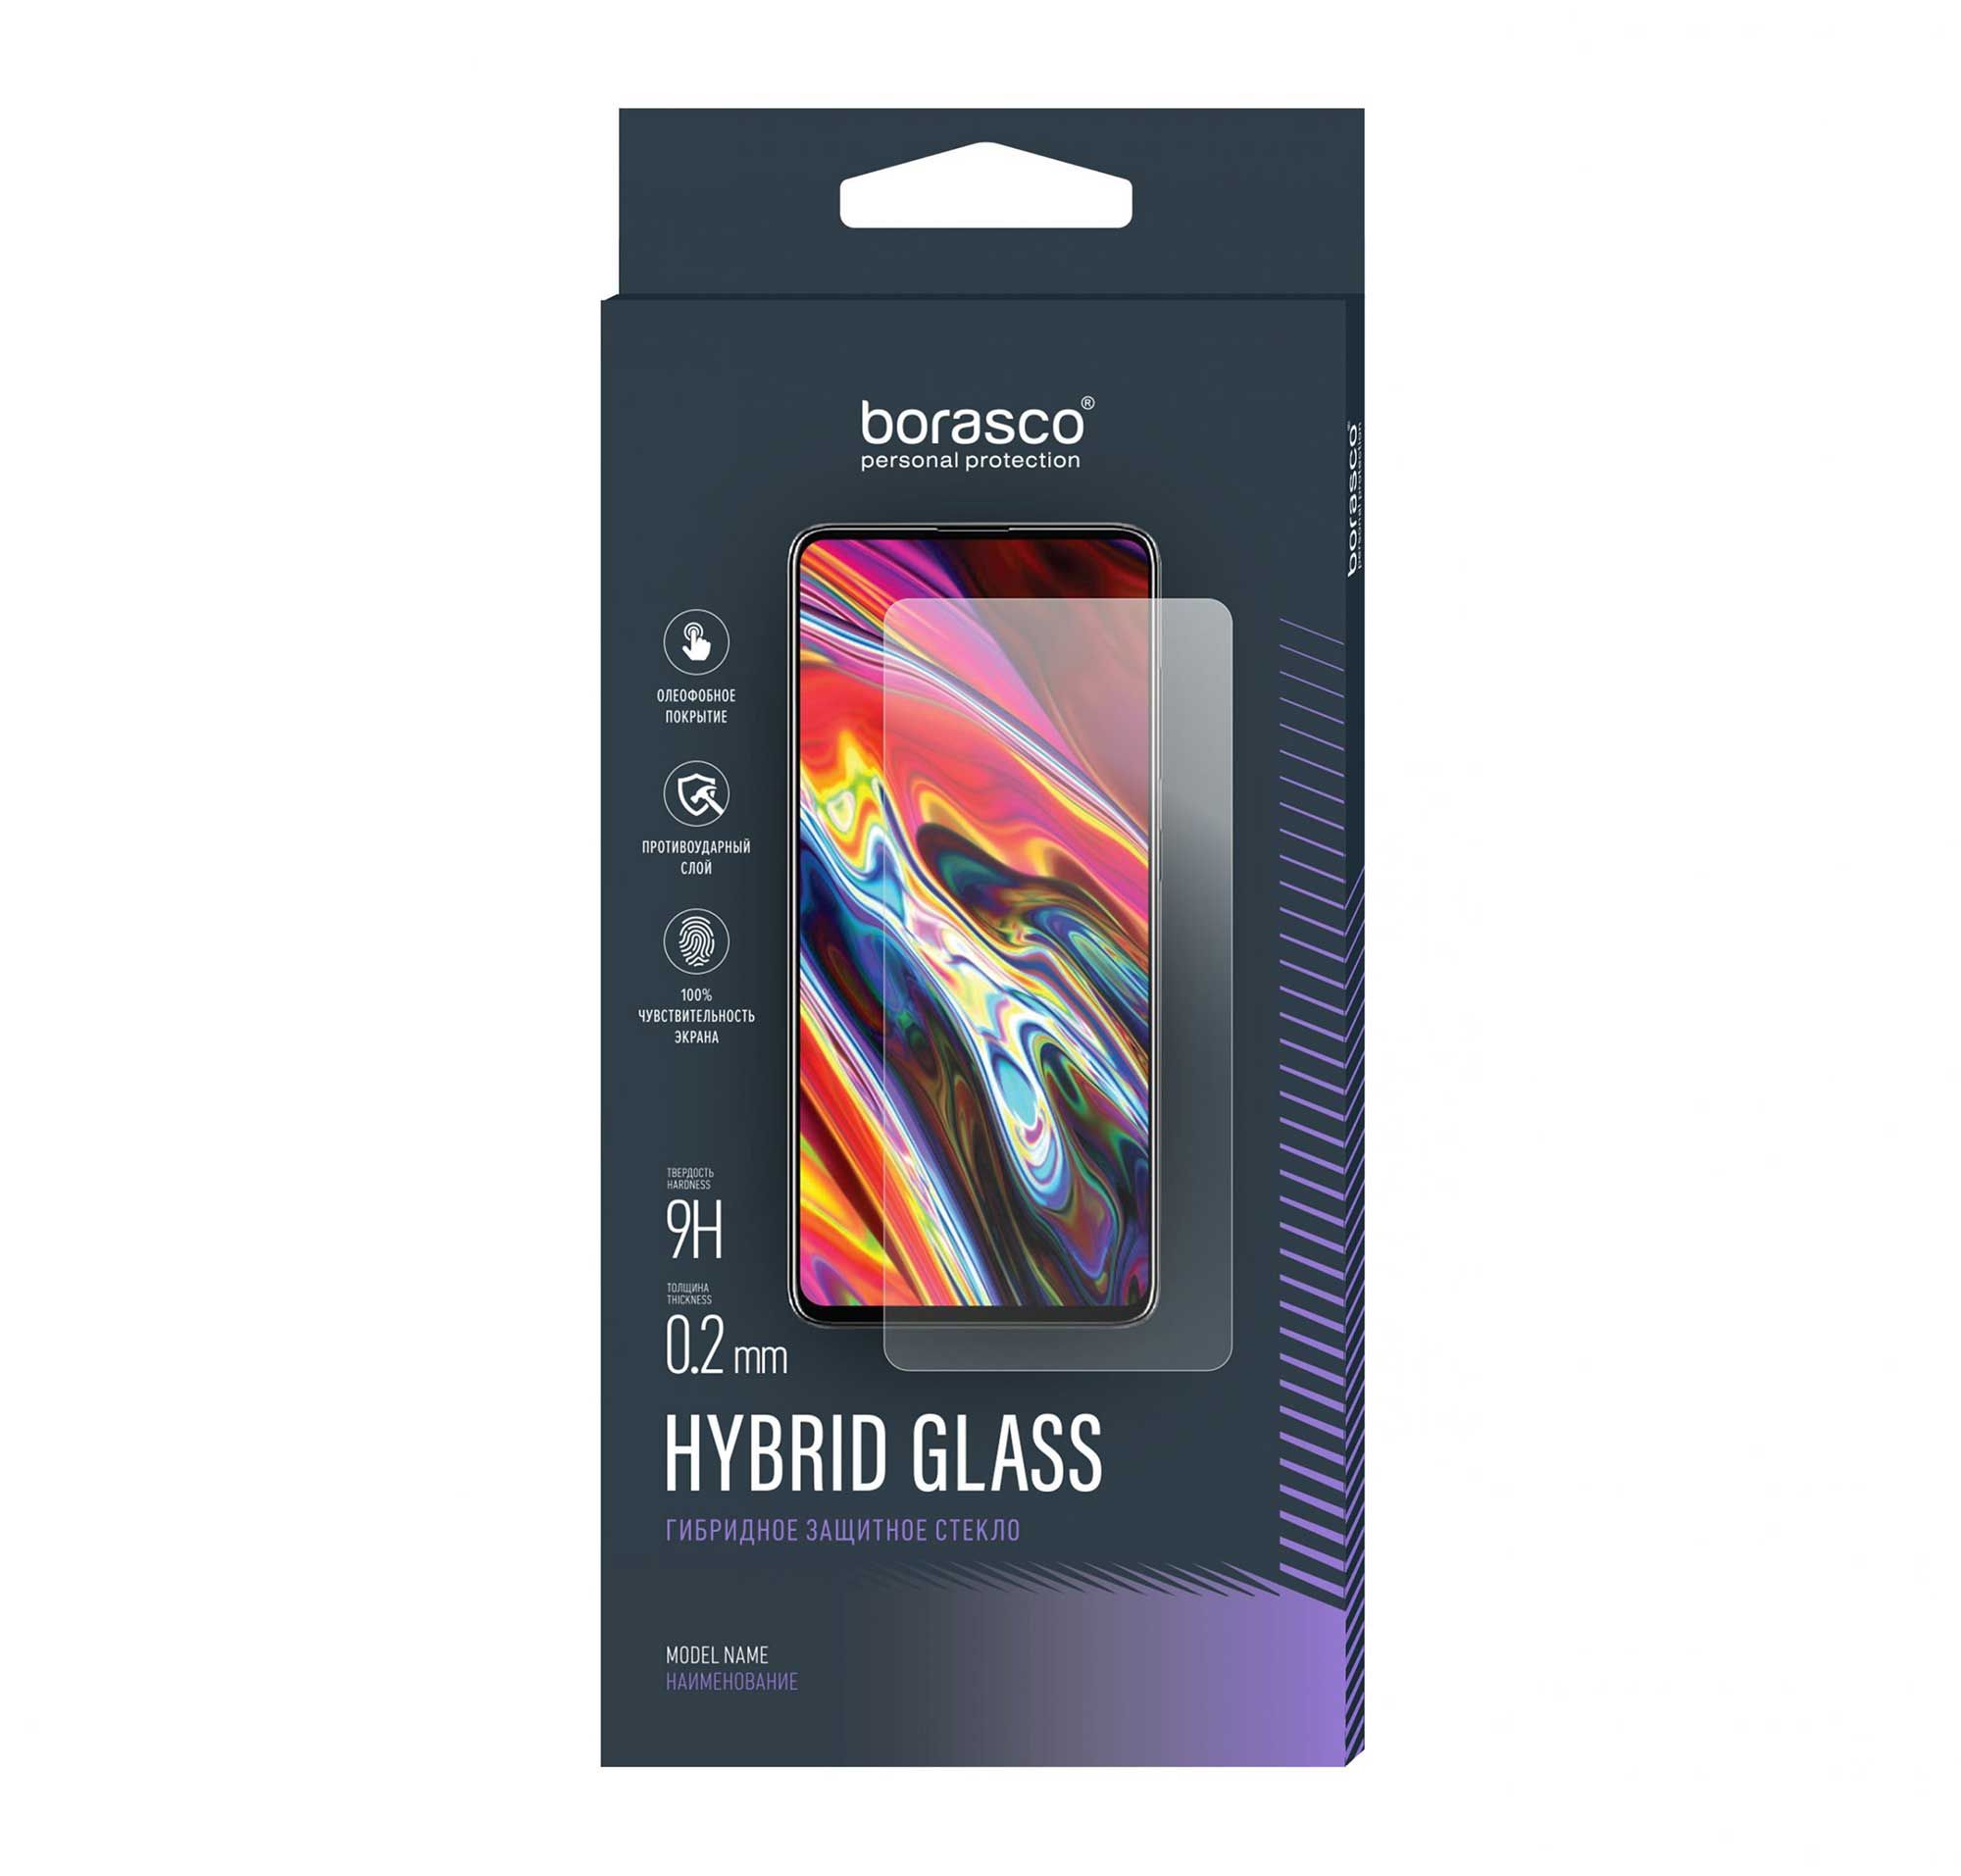 Защитное стекло Hybrid Glass для UMIDIGI BISON 2 защитное стекло hybrid glass для umidigi bison 2